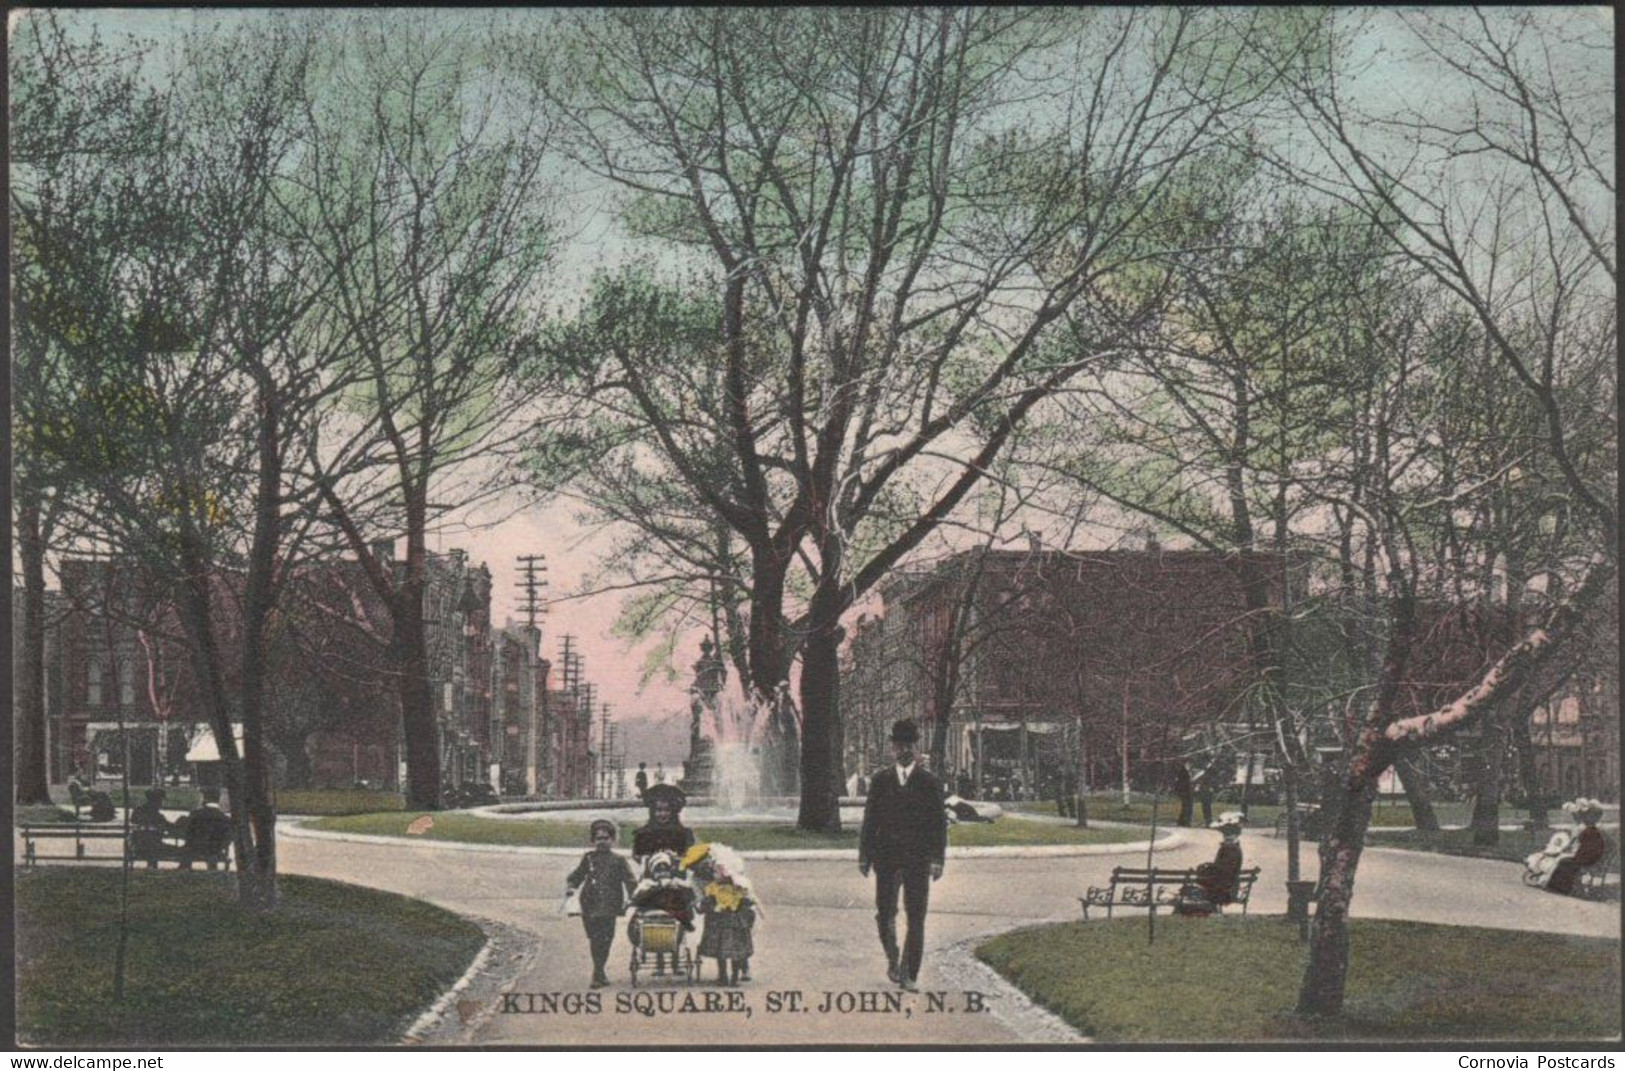 Kings Square, St John, New Brunswick, C.1905-10 - EG Nelson Postcard - St. John